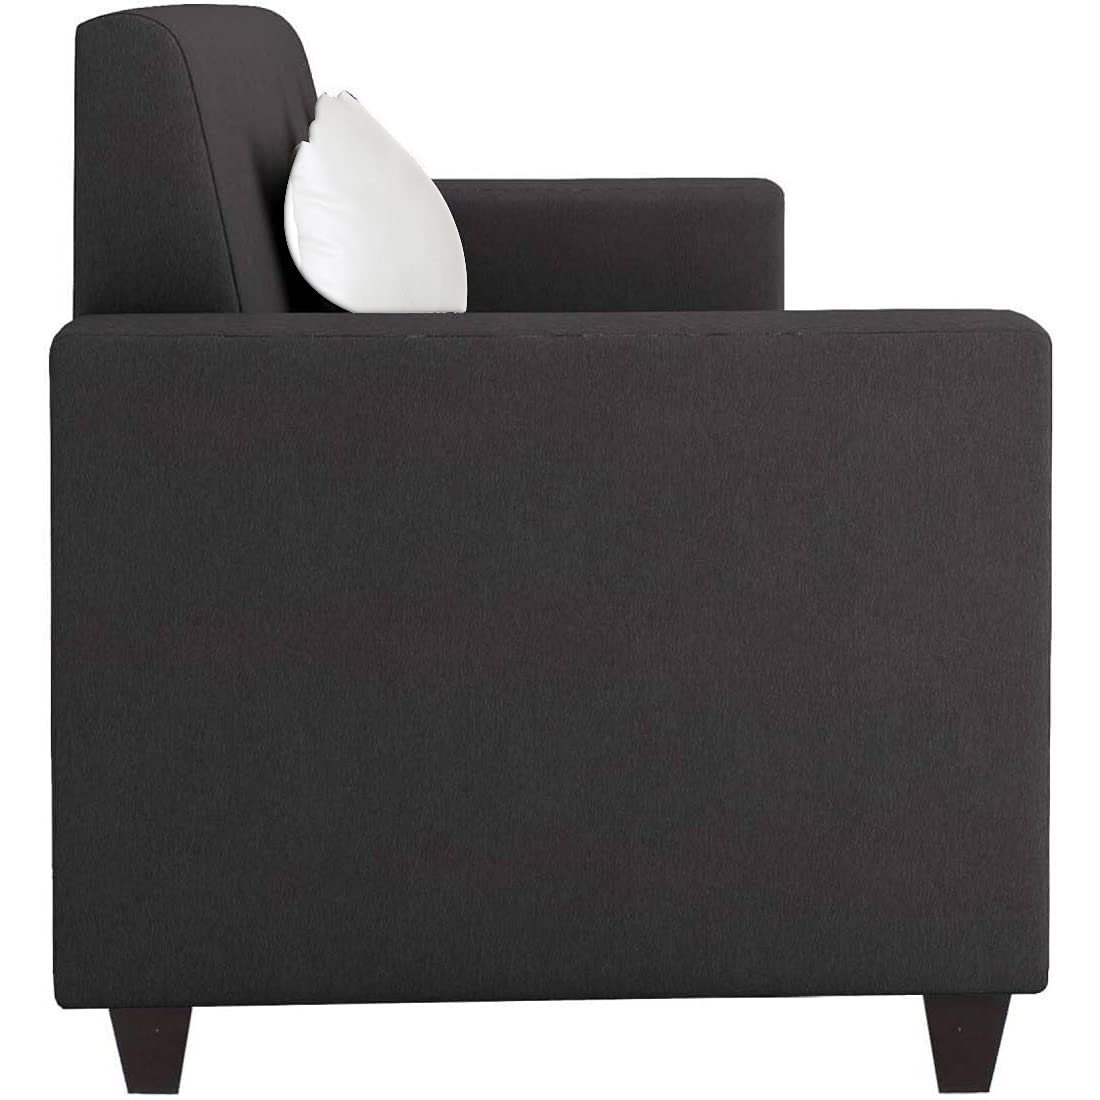 Torque India Kosmo 3 Seater Fabric Sofa With Cushion For Living Room (Black) | 3 Seater Black Fabric Sofa - Torque India